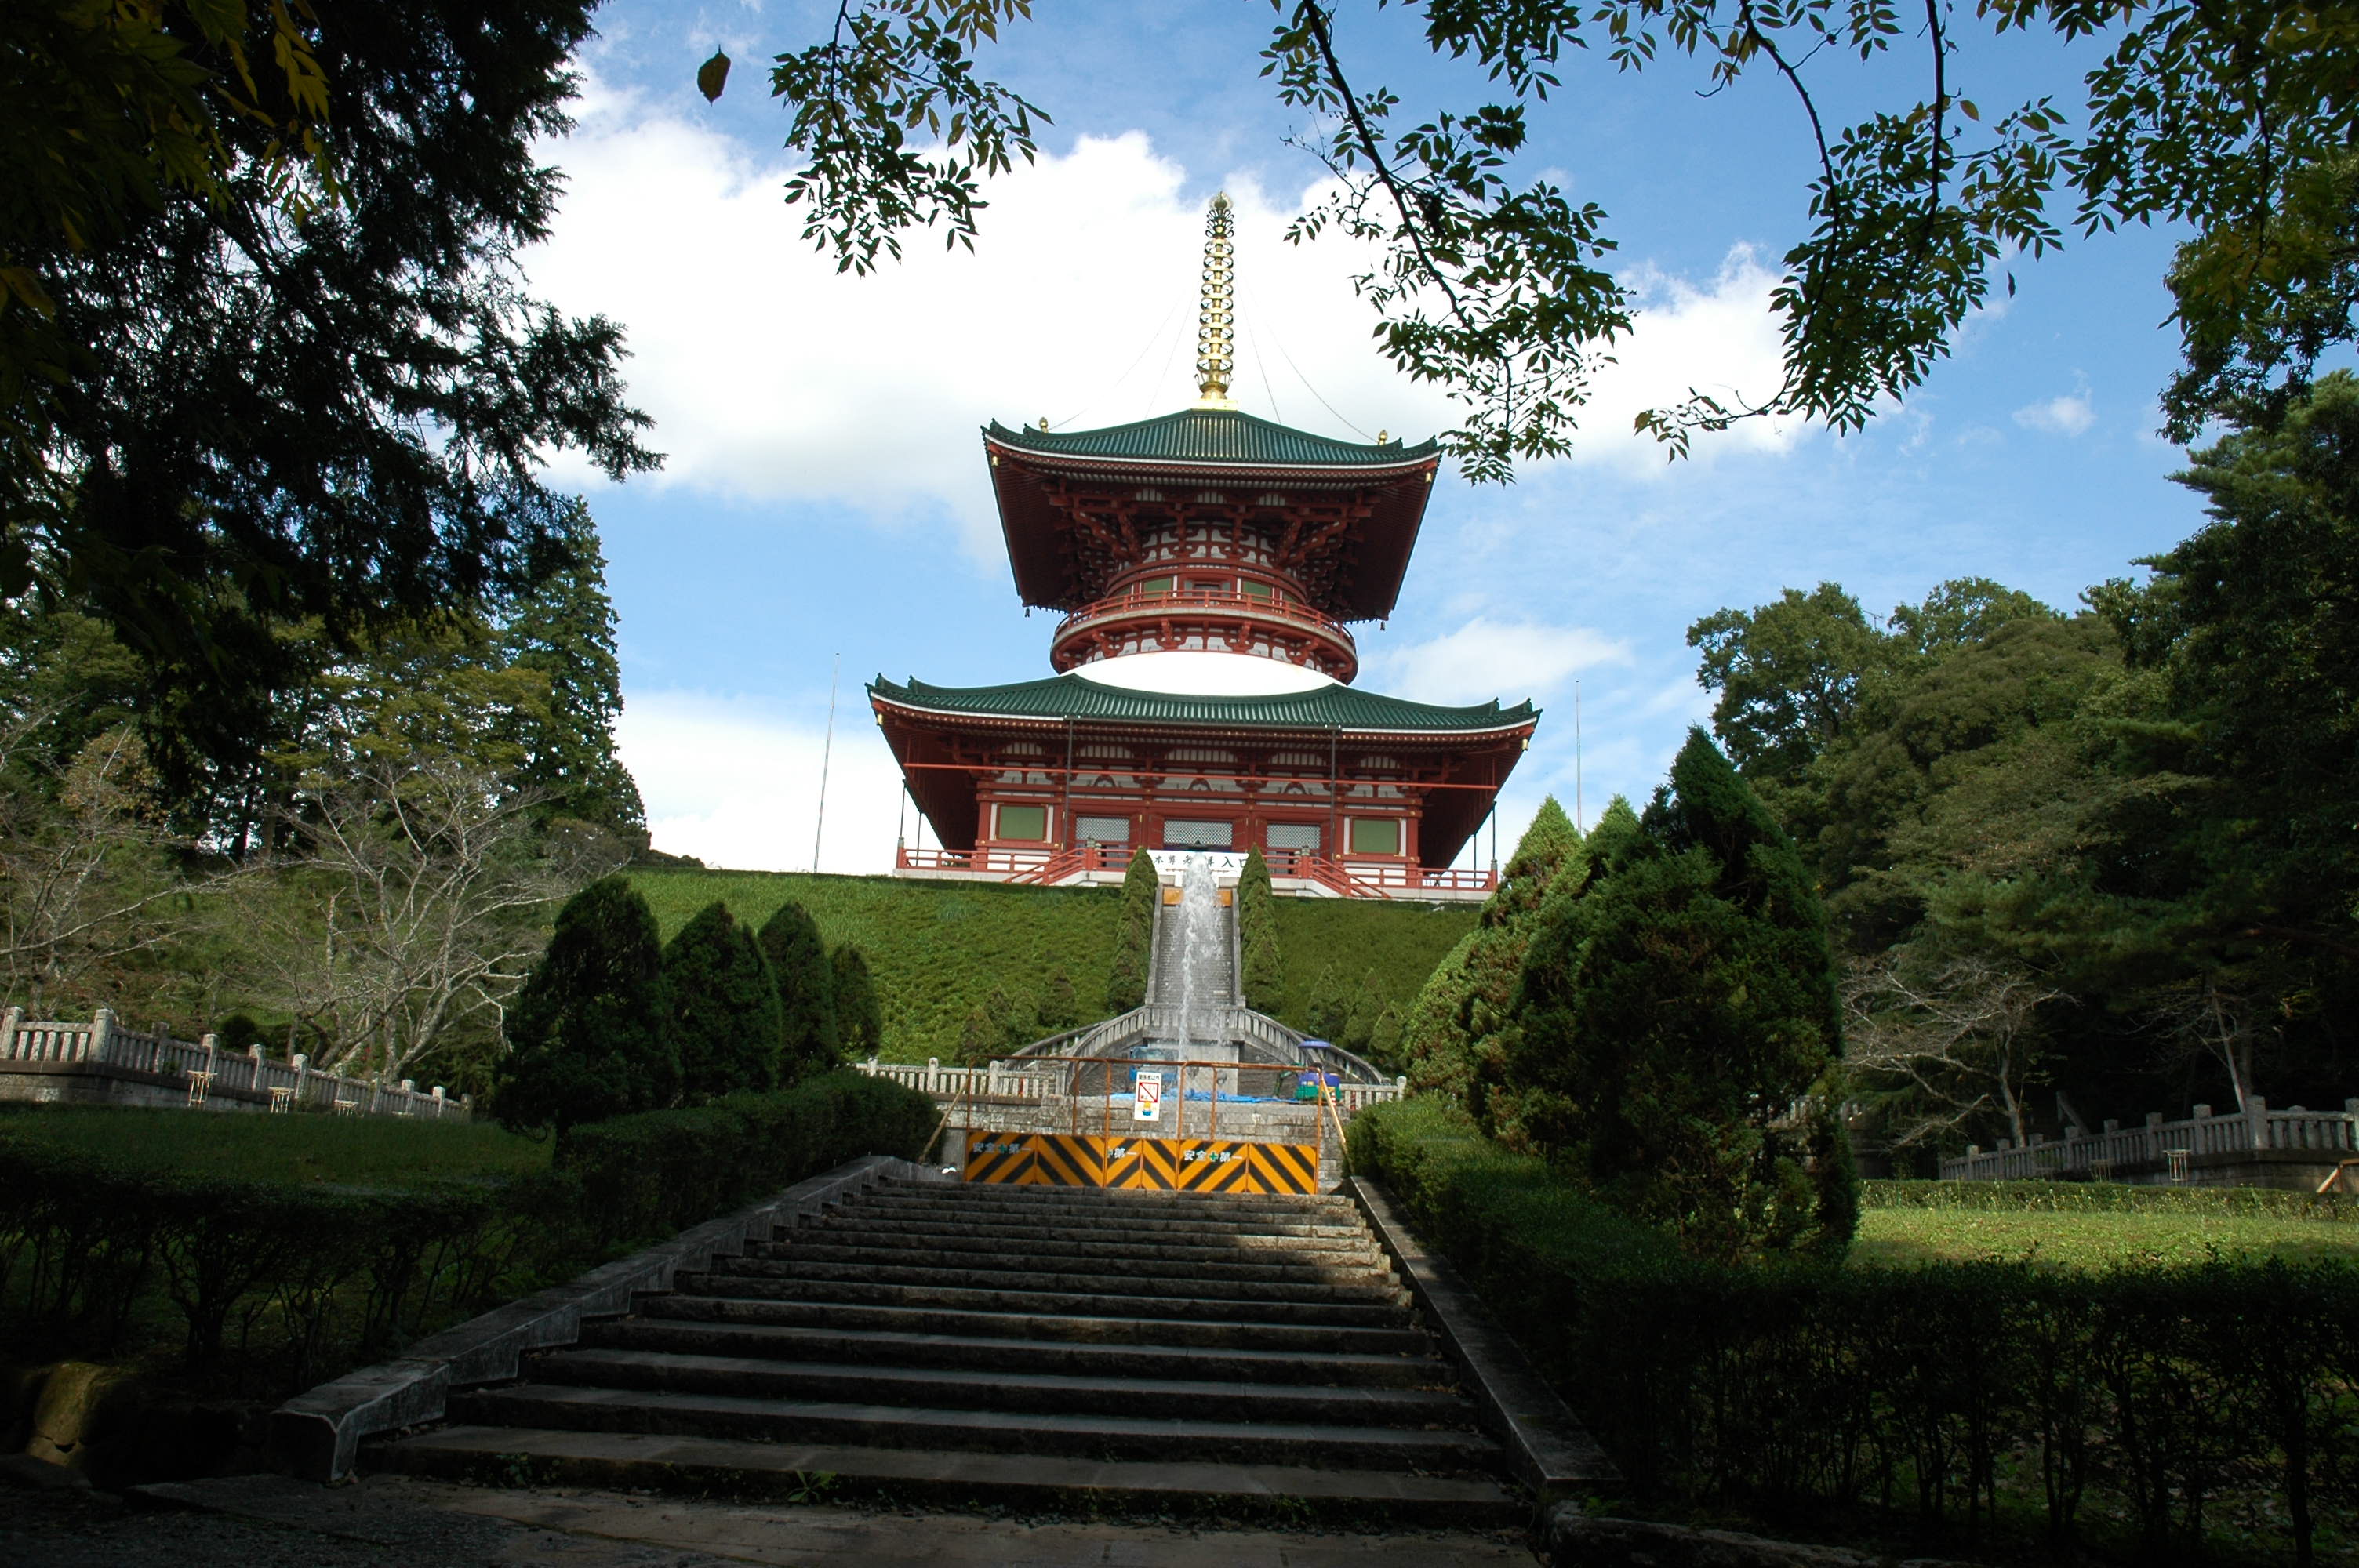 Narita-san shinsho-ji temple